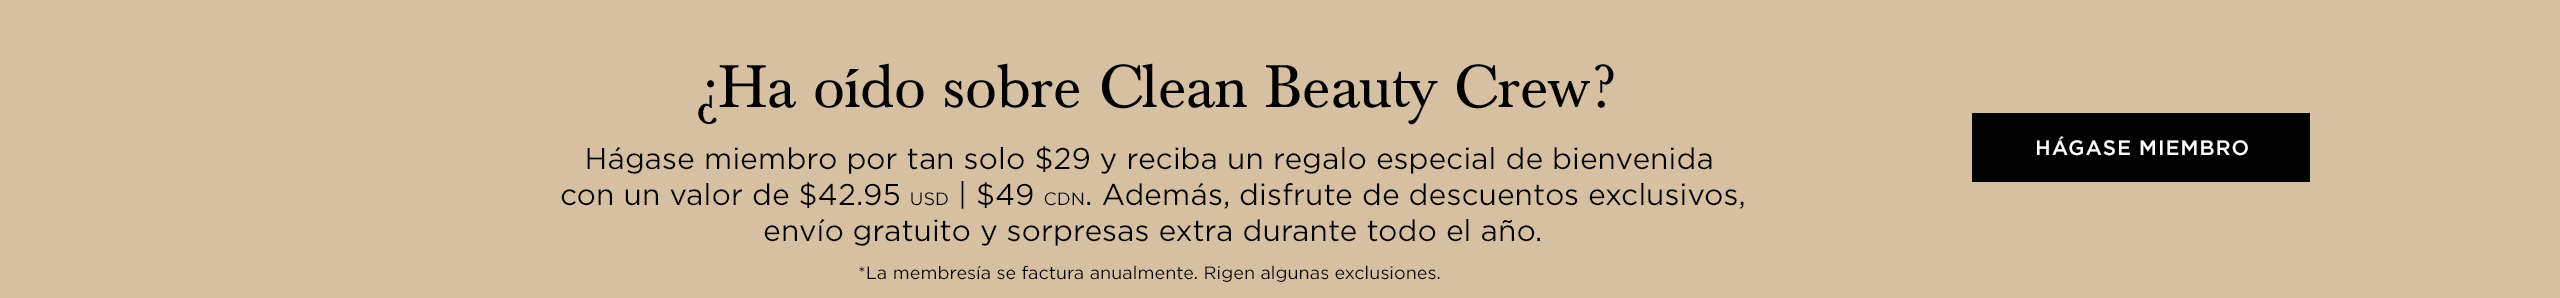 Clean Beauty Club Pencil Banner DarkBrown